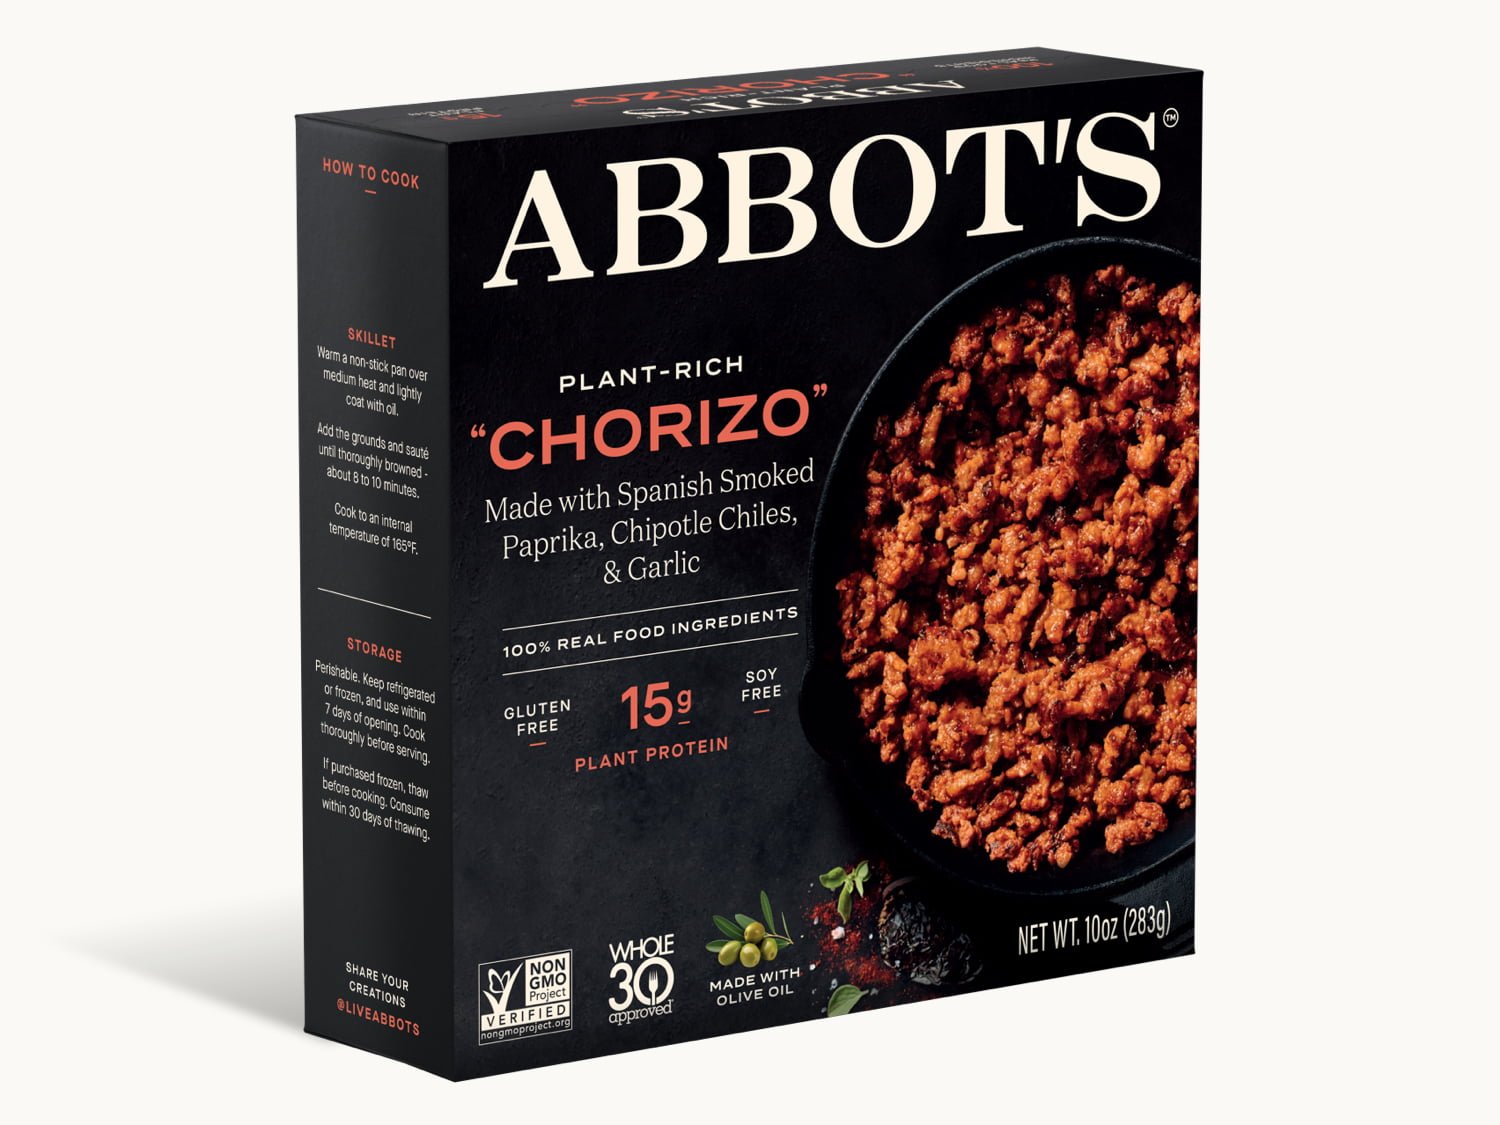 abbots-plant-rich-chorizo-00.jpg